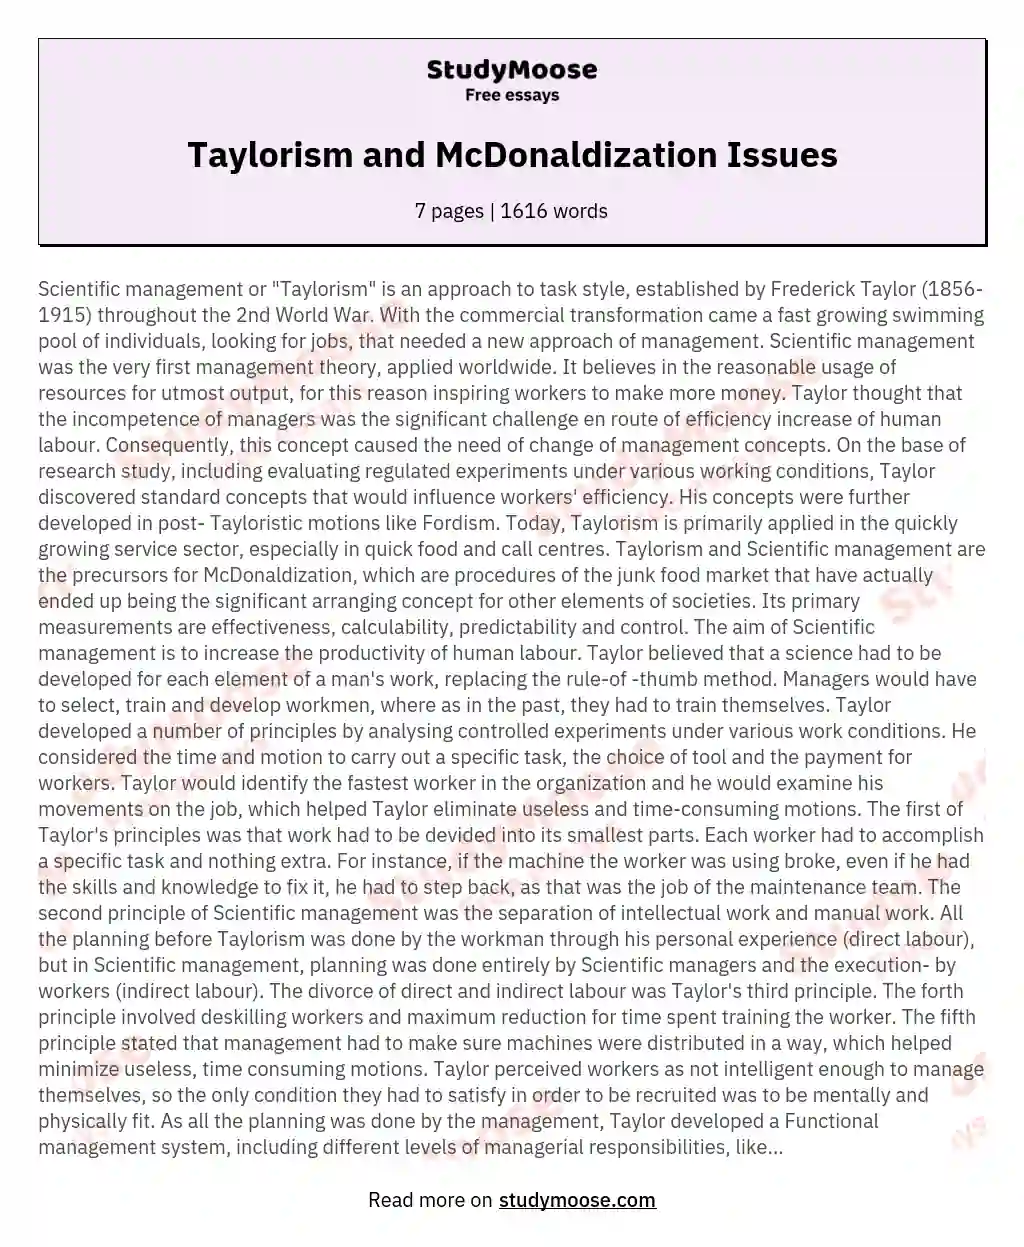 Taylorism and McDonaldization Issues essay